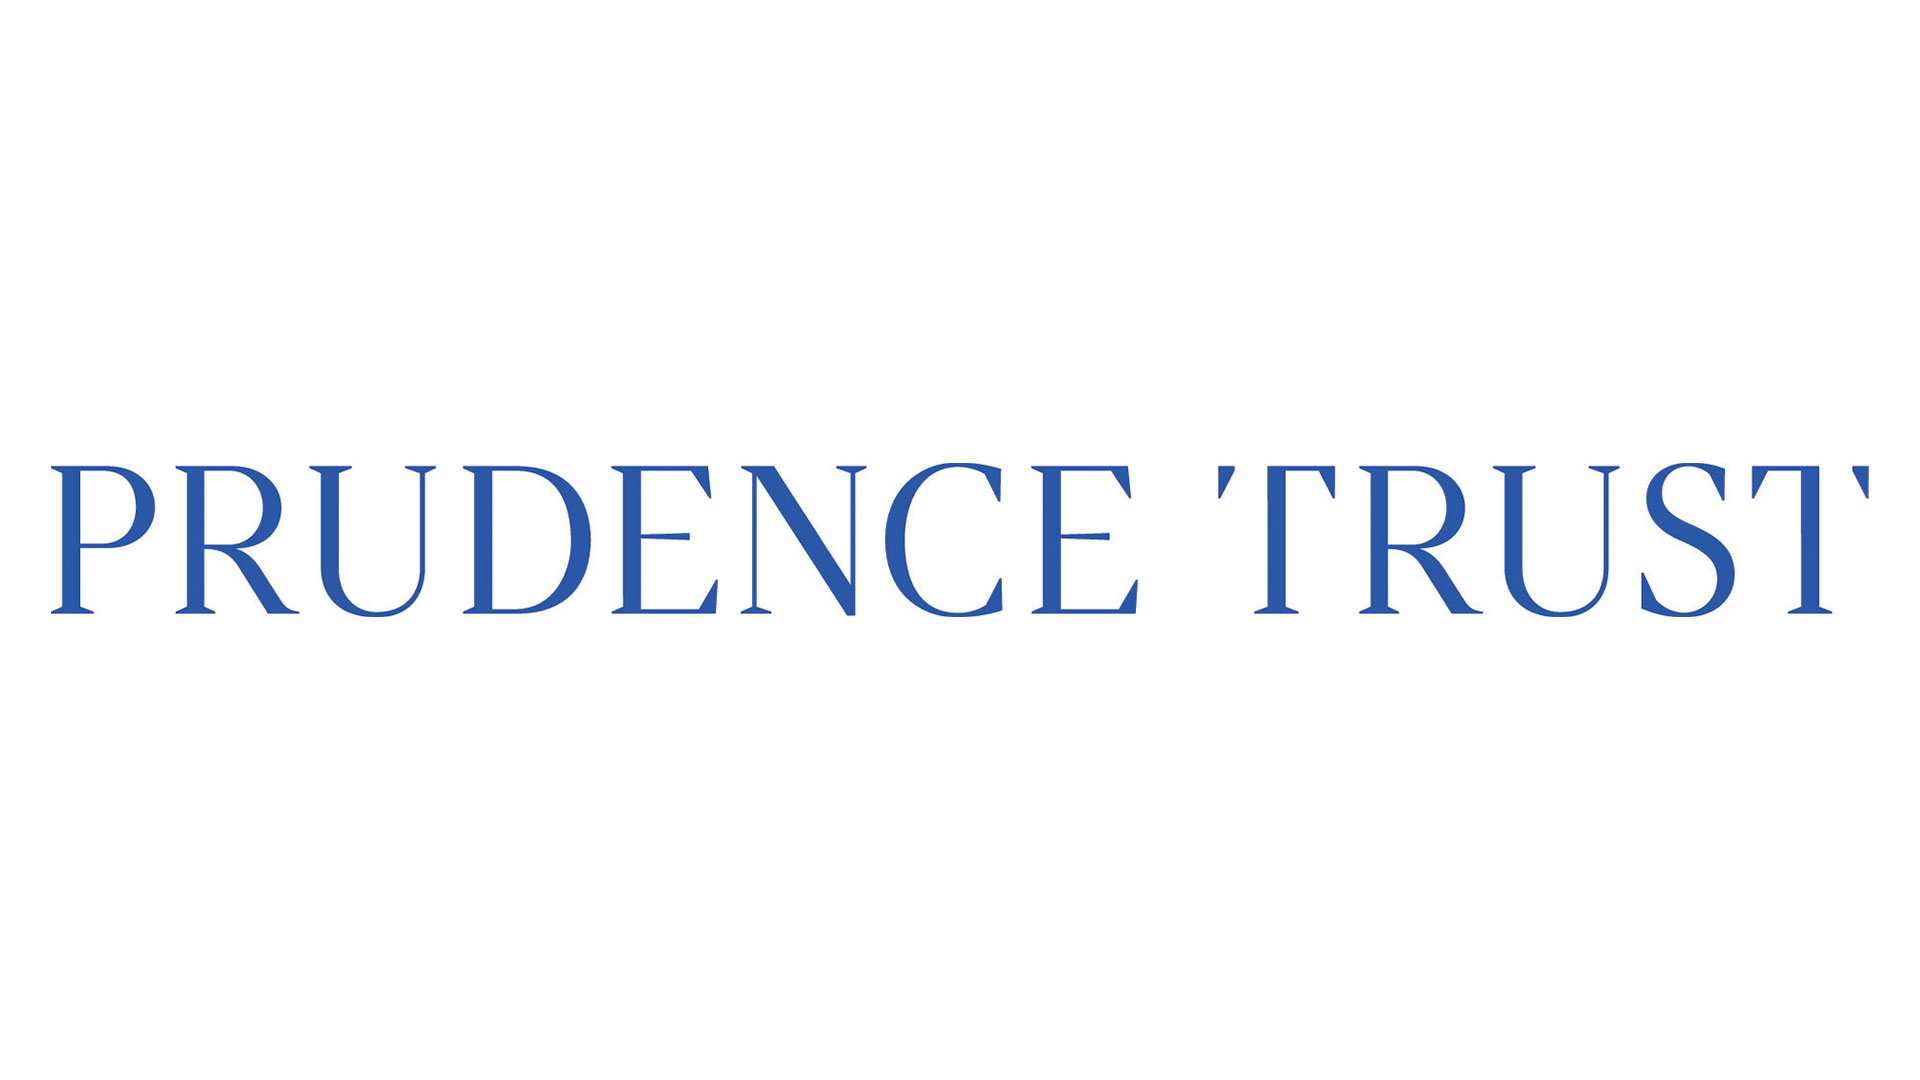 The Prudence Trust